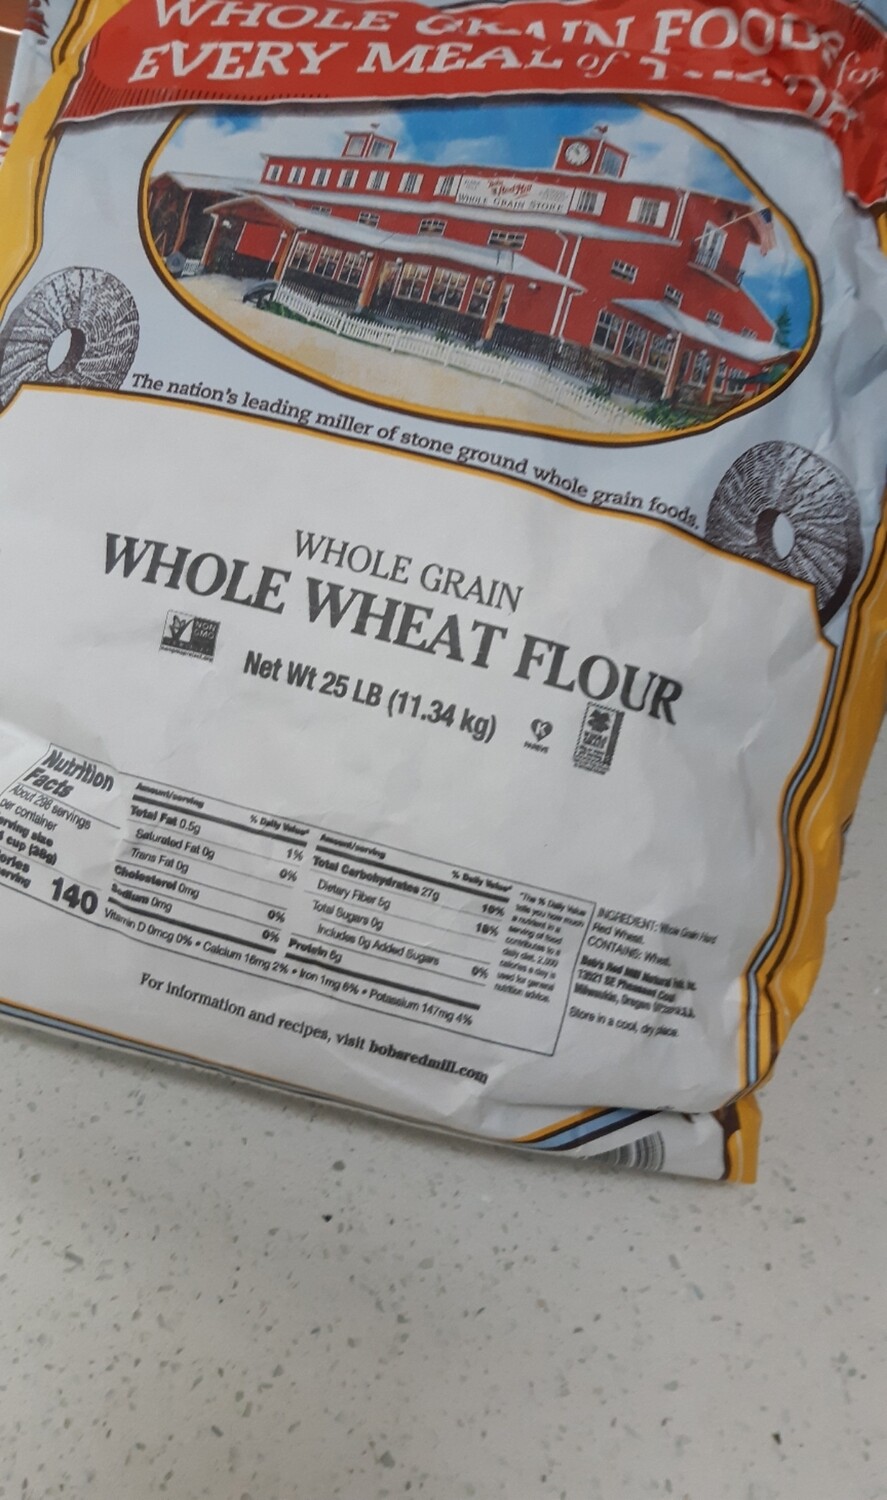 Bob's Red Mill: 25lb Whole Wheat Flour - Whole Grain